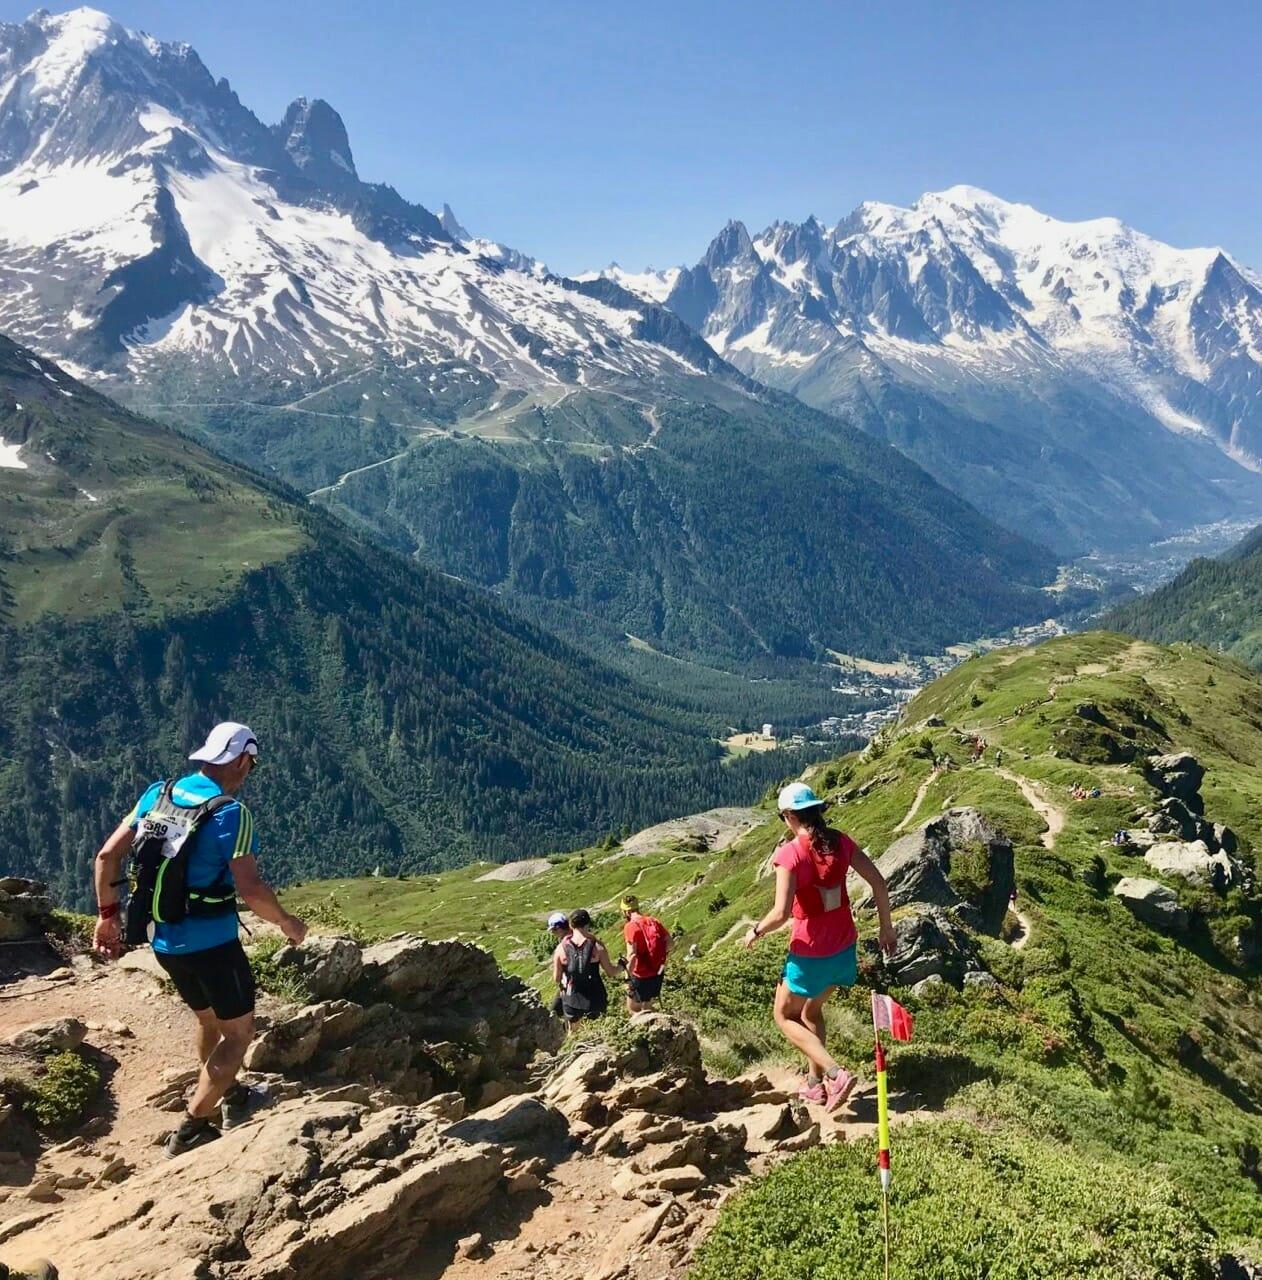 Trail runners on the Aiguillette des Posettes during the Mont Blanc Marathon